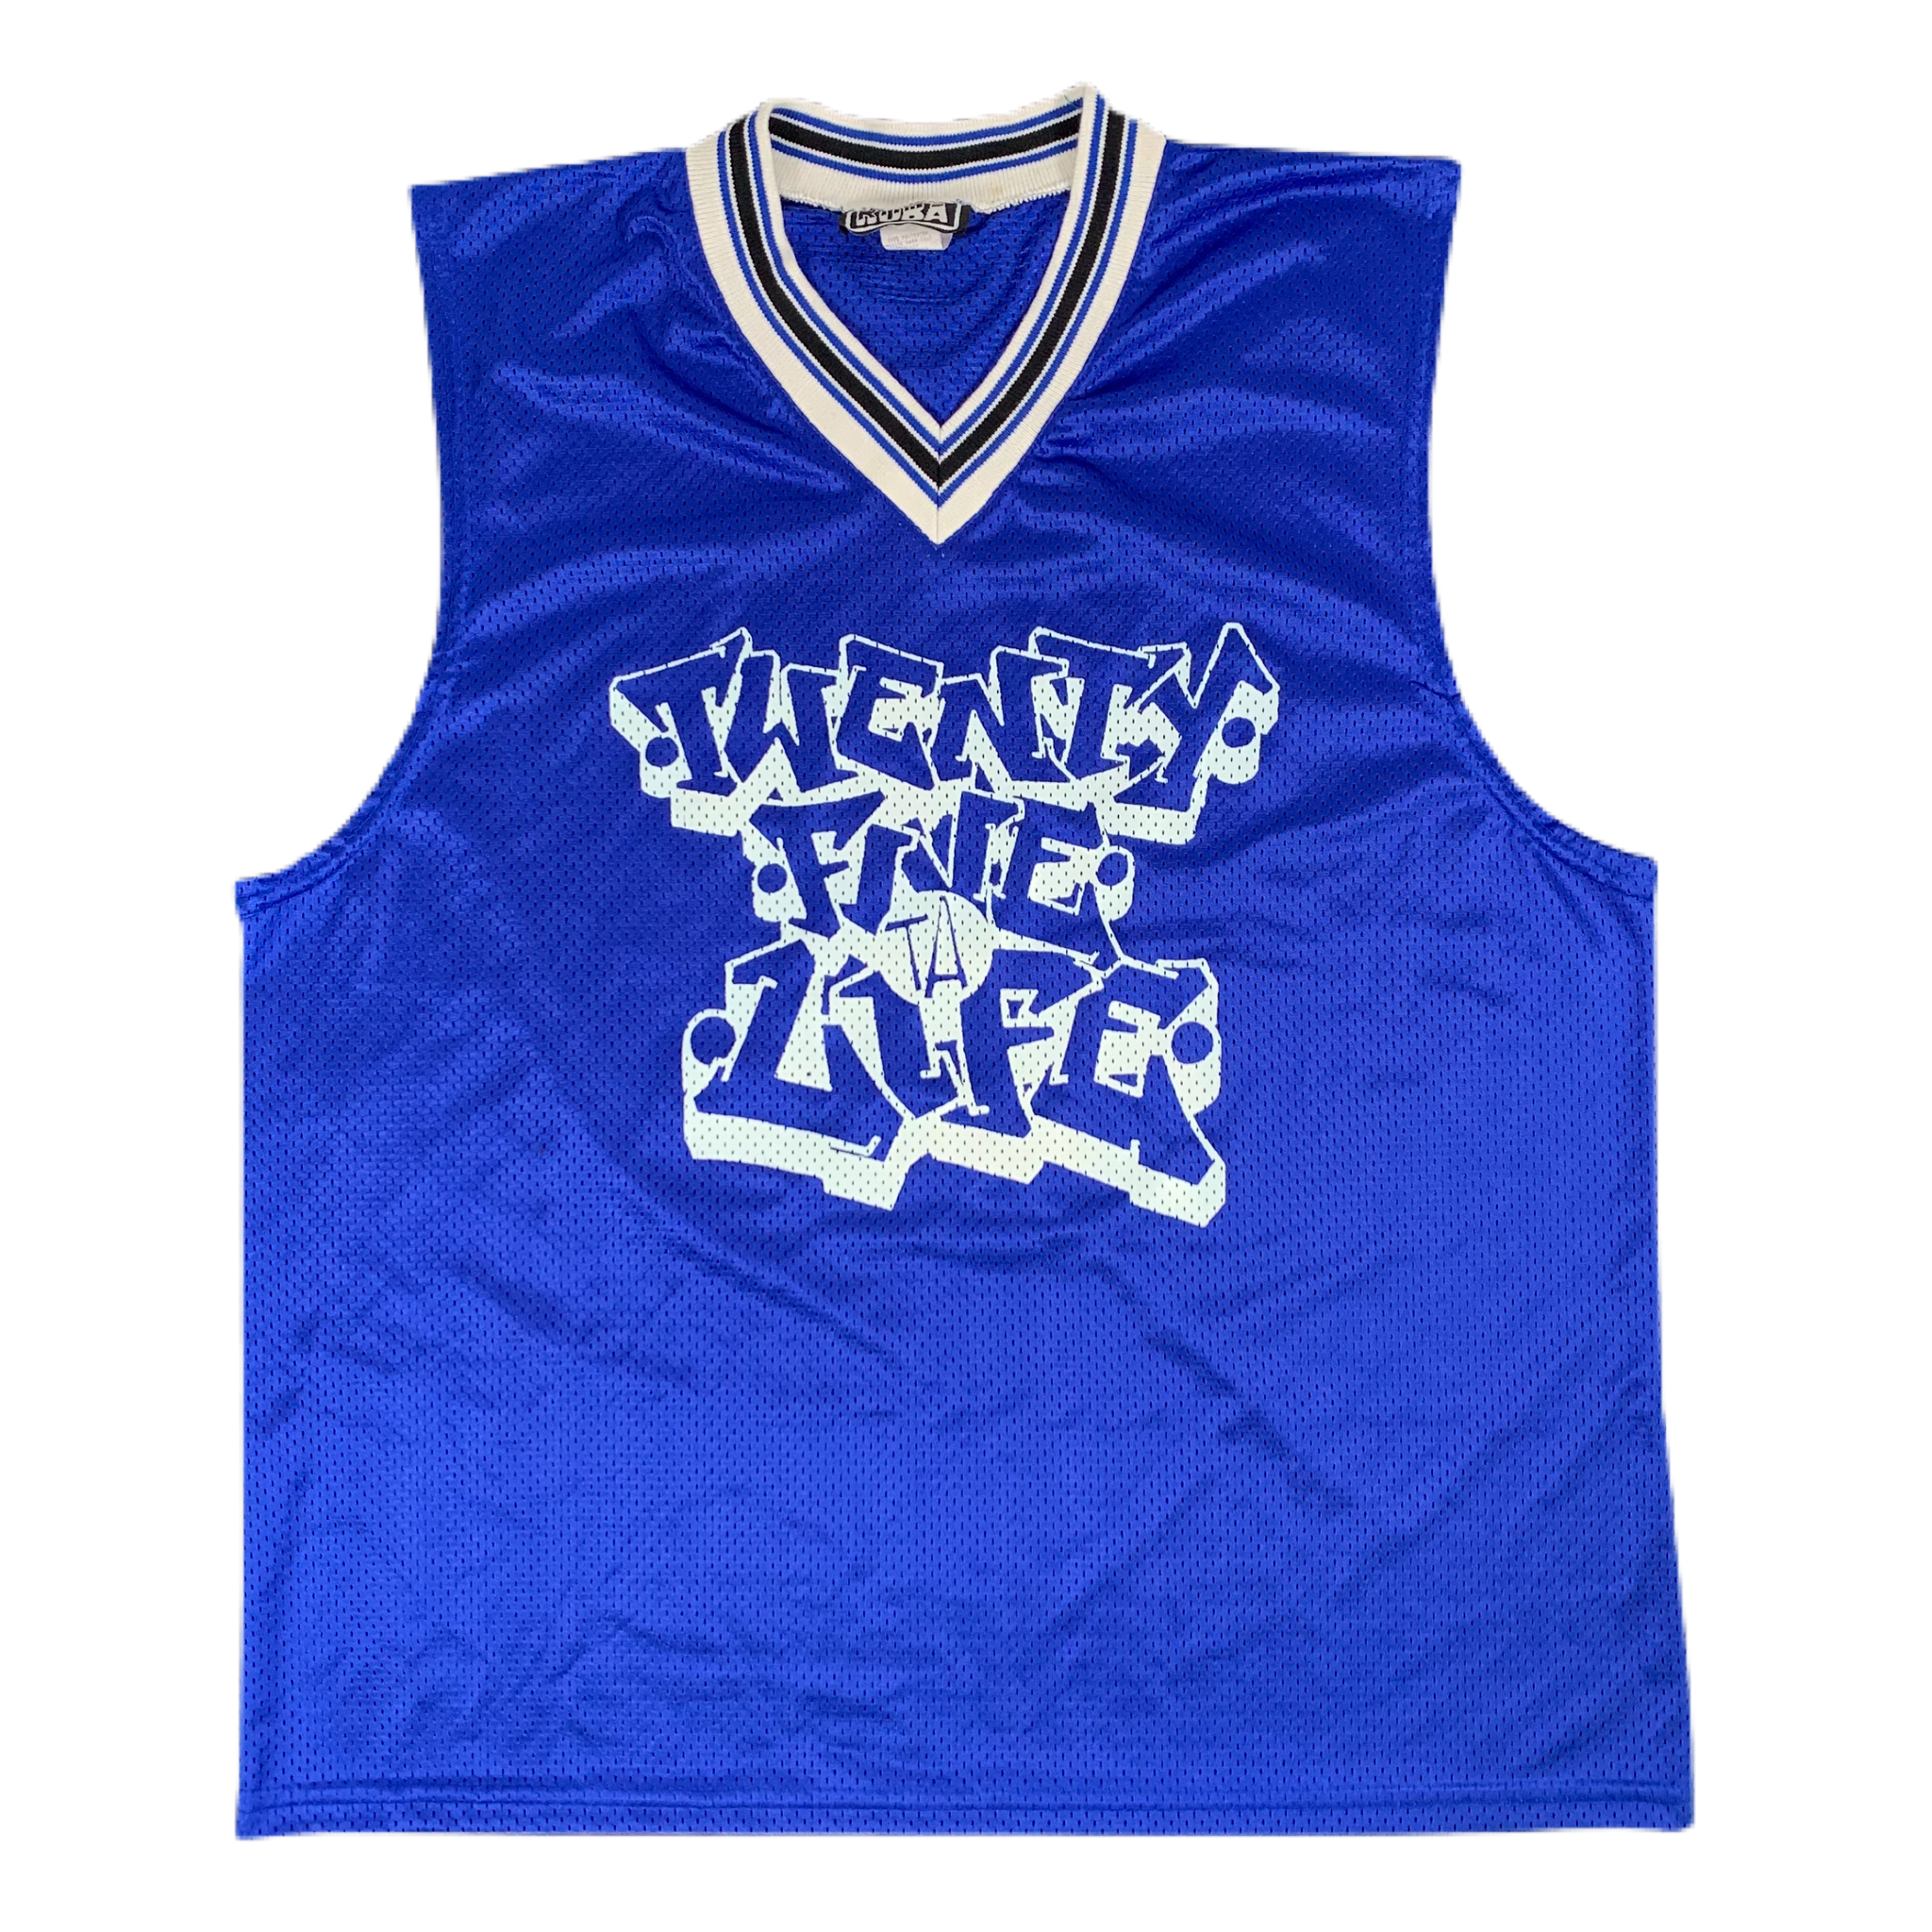 Vintage 25 Ta Life Keepin It Real Basketball Jersey